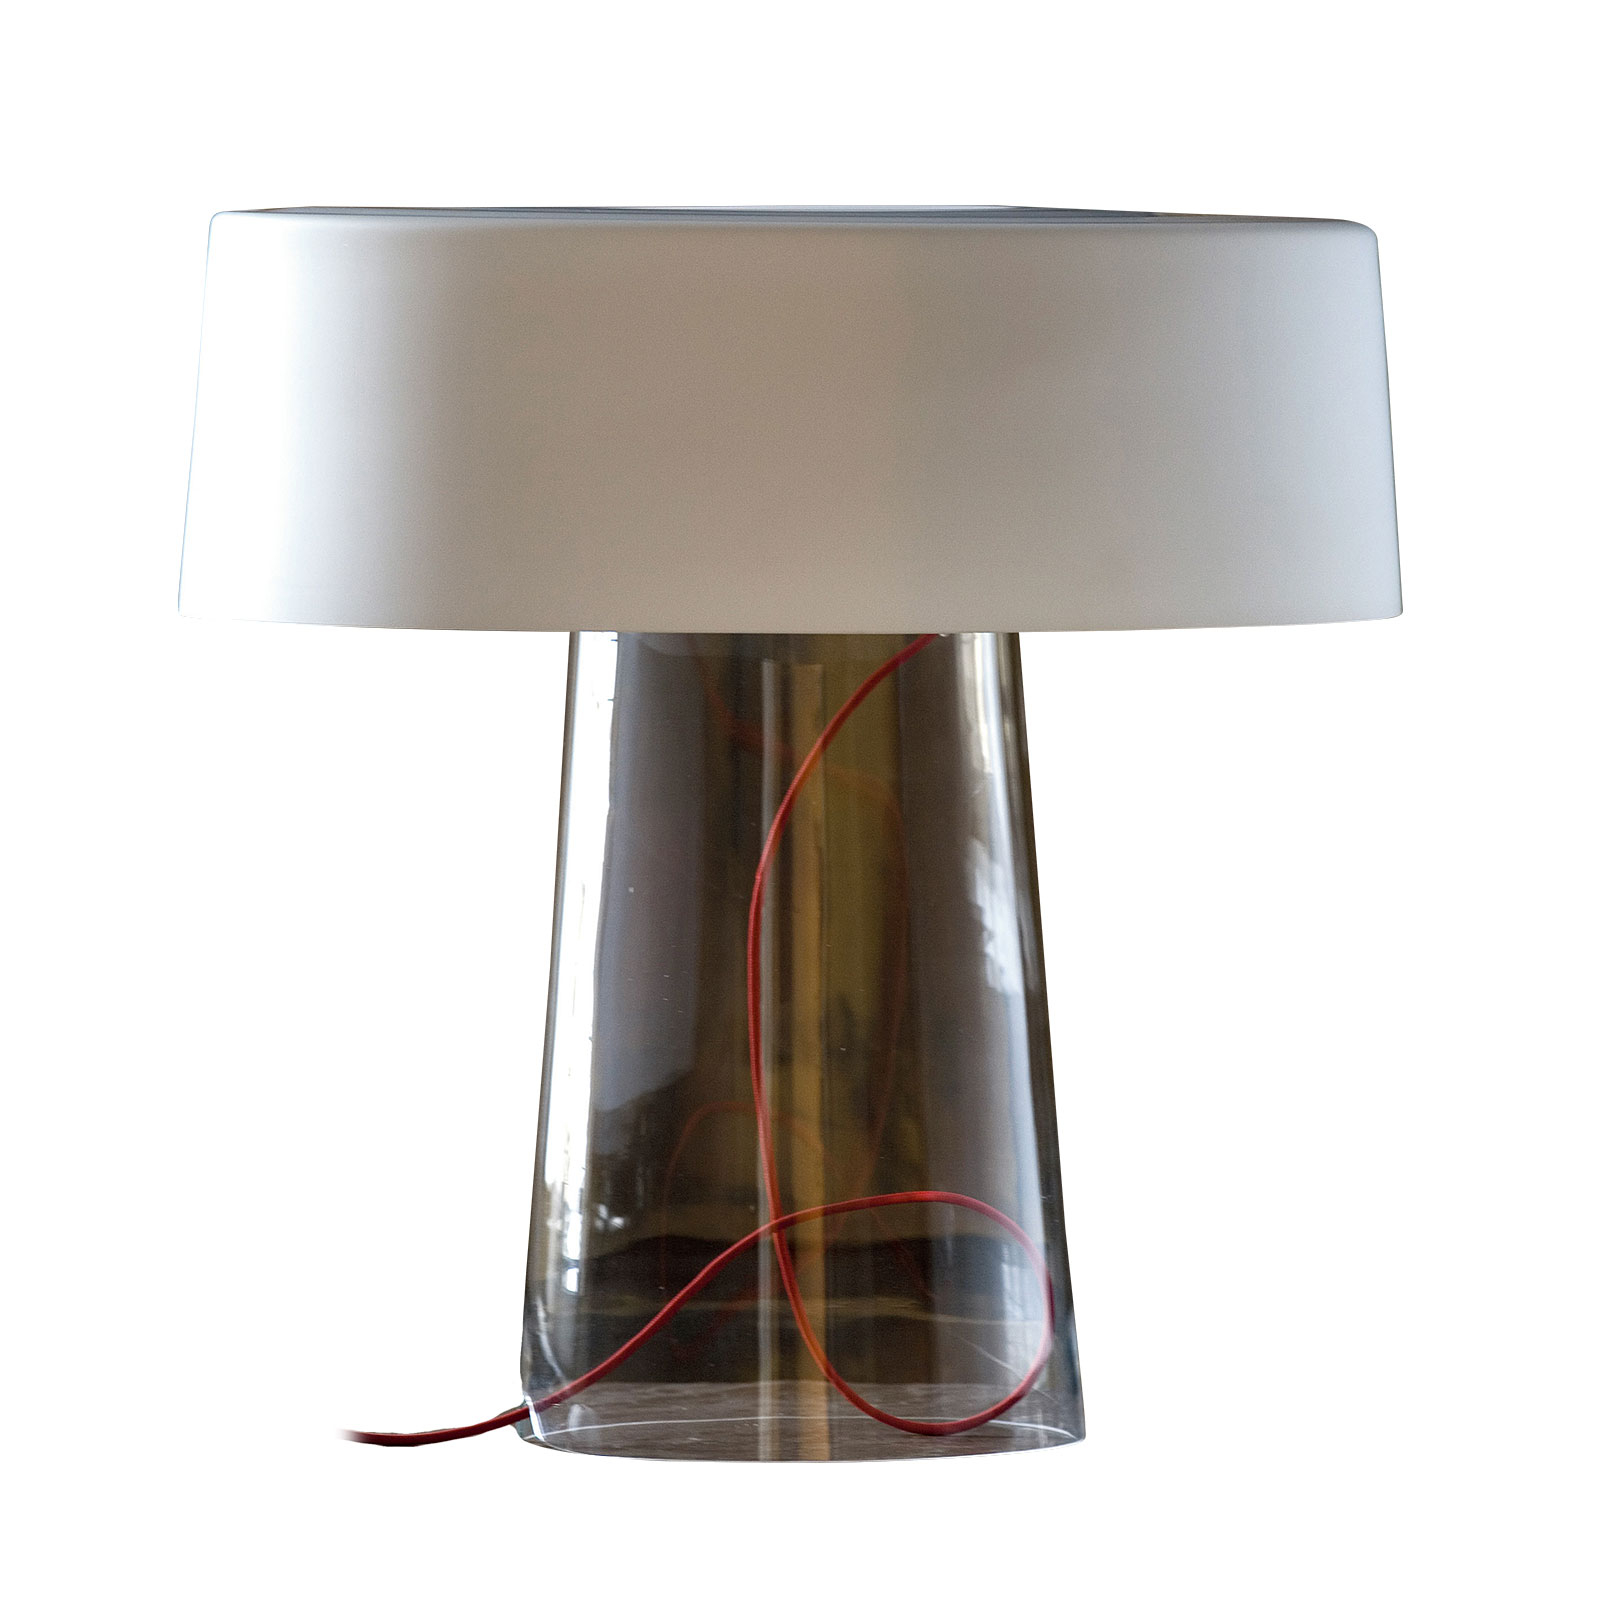 Prandina Glam tafellamp 48cm helder/kap wit